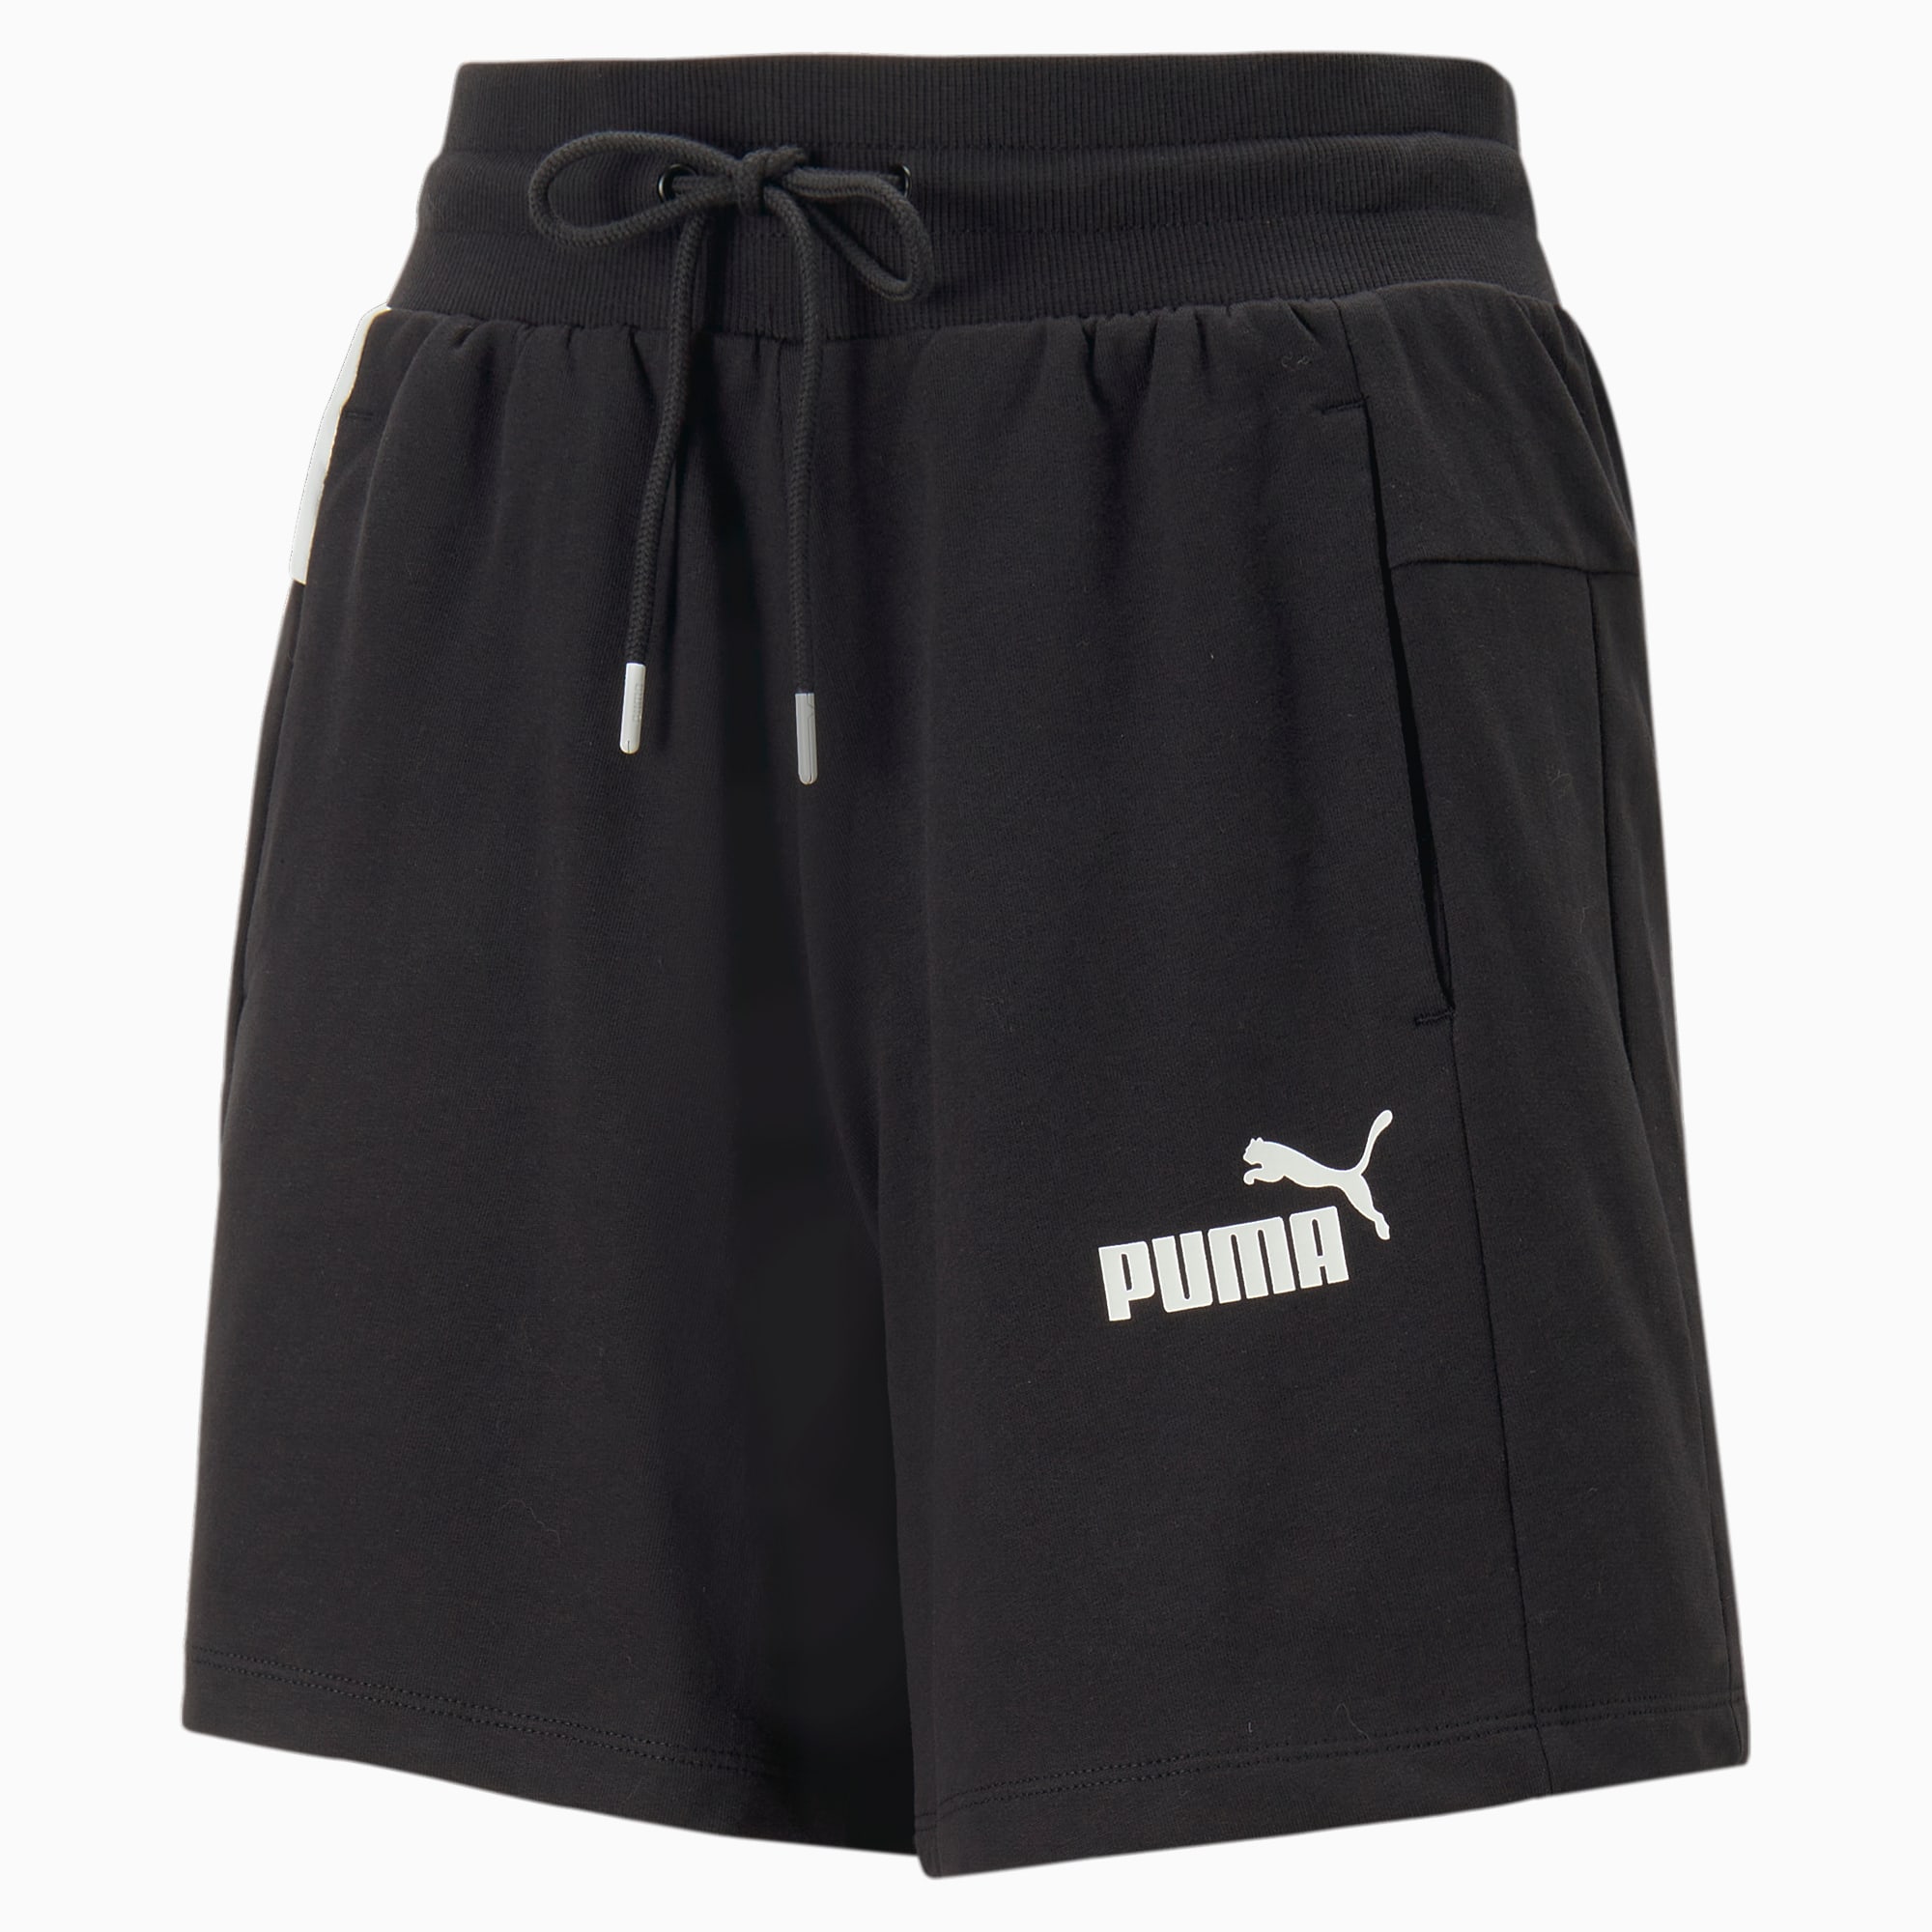 PUMA Around The Block Shorts Ft Women, Black/White, Size 3XL, Clothing